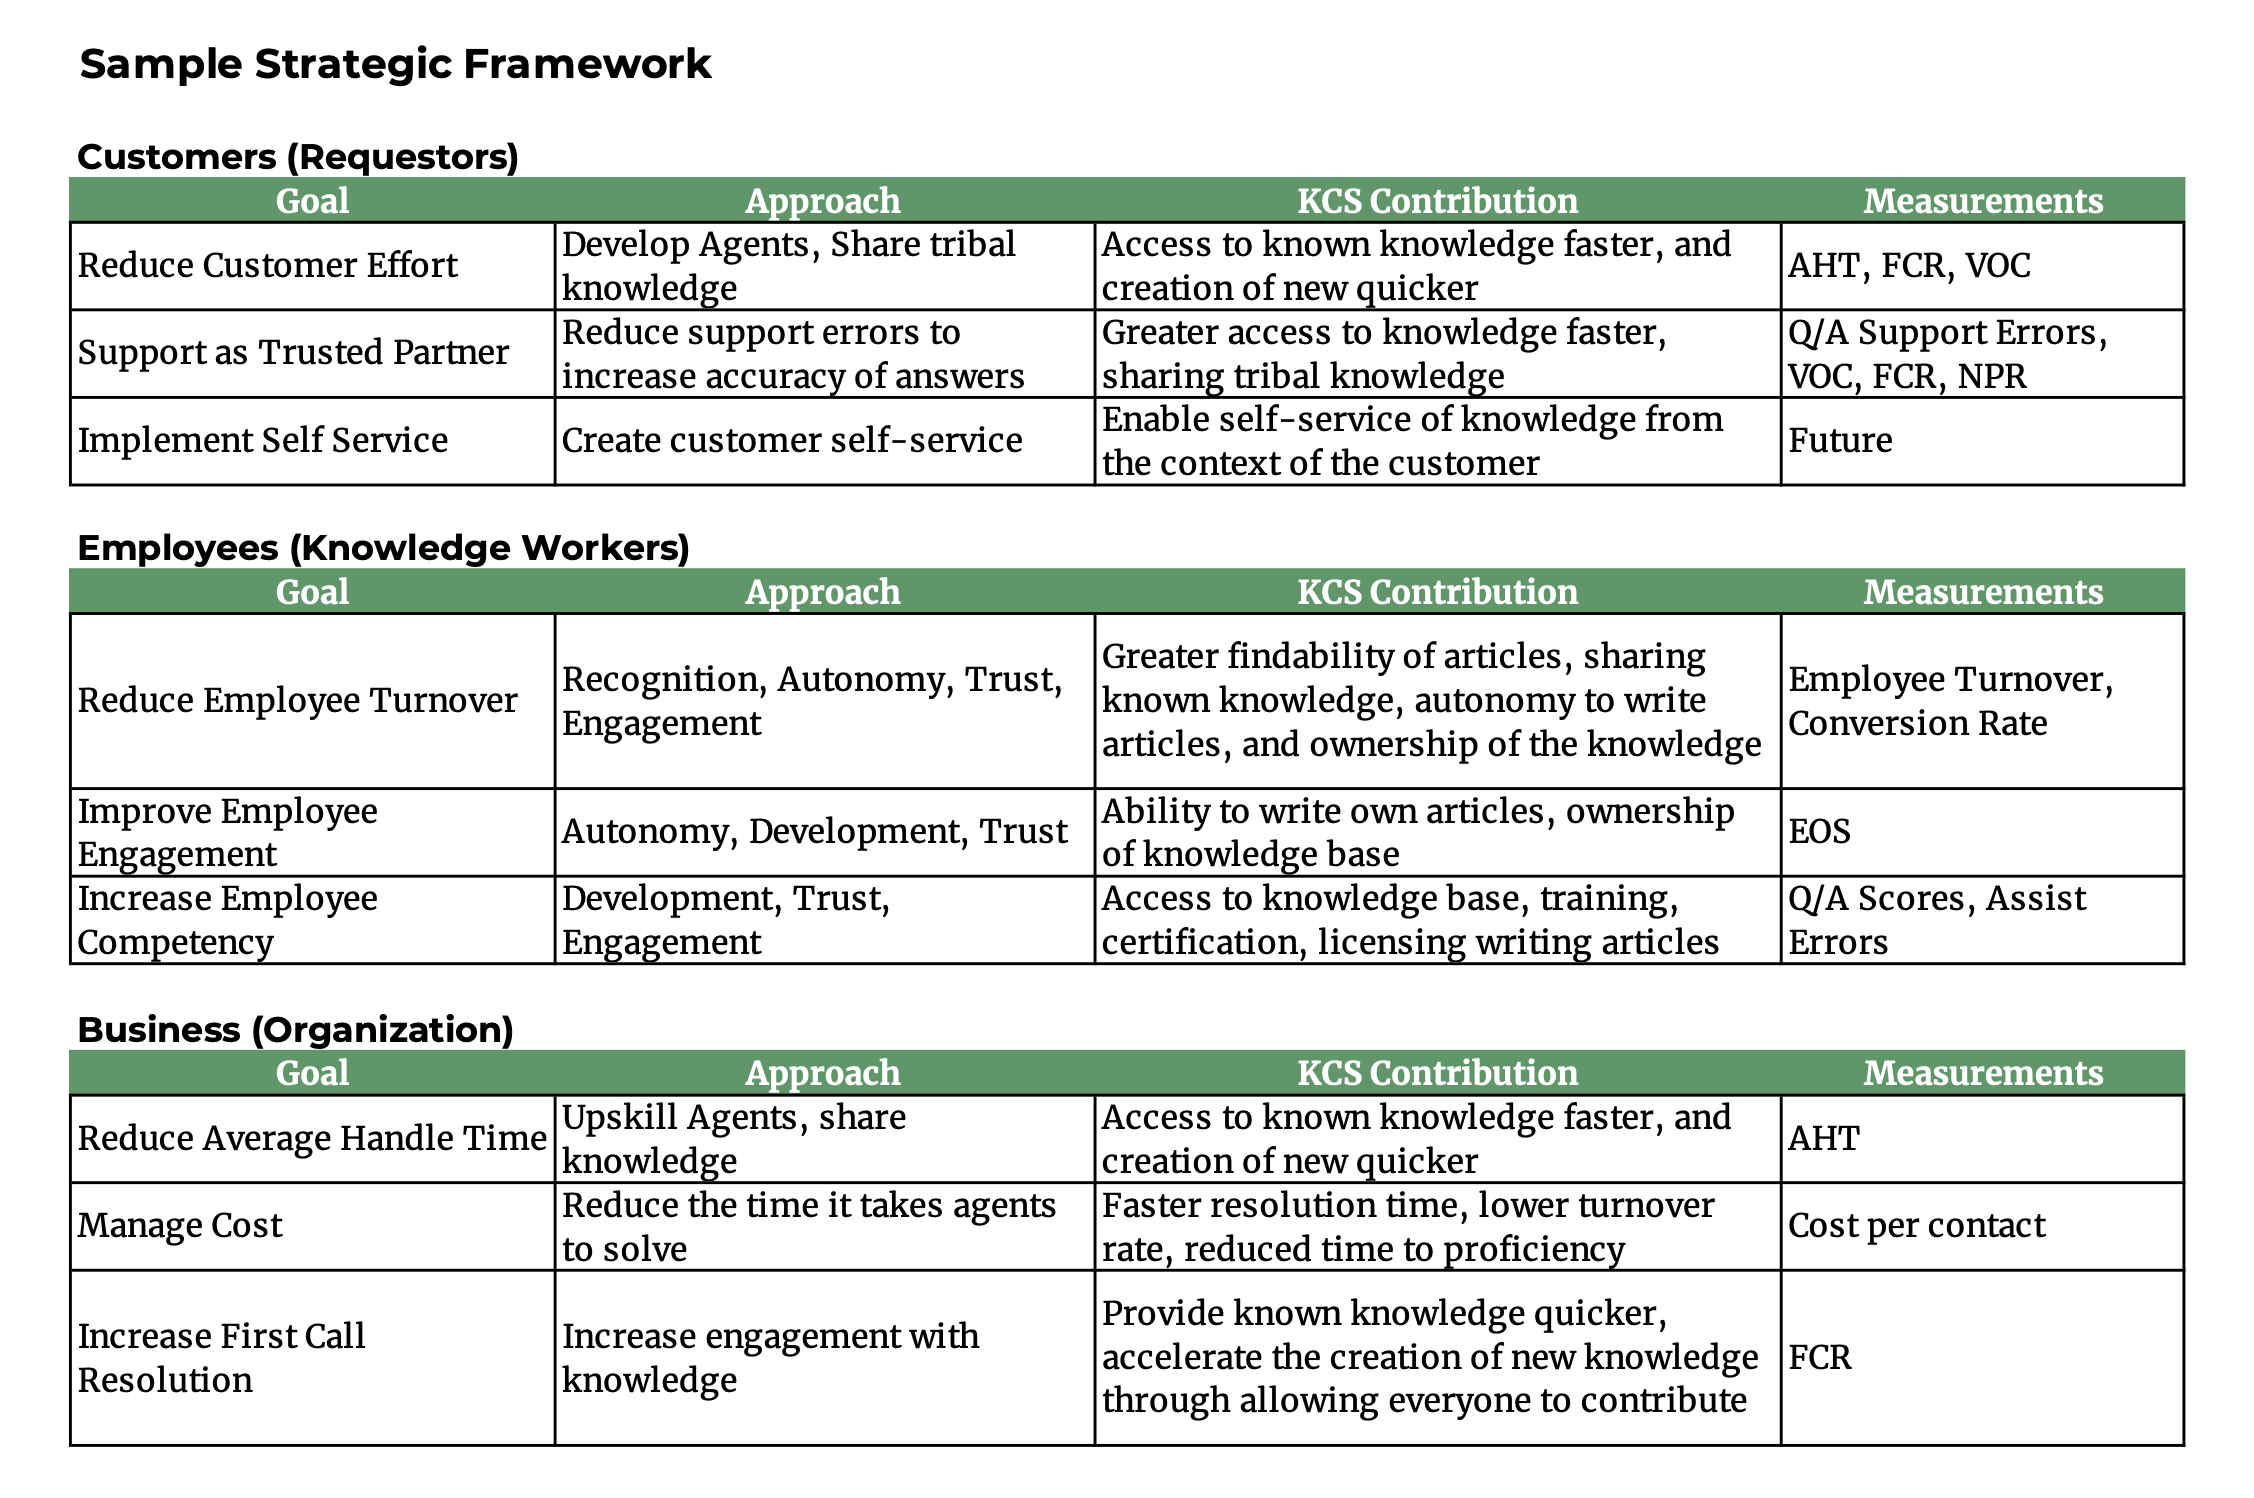 Sample Strategic Framework